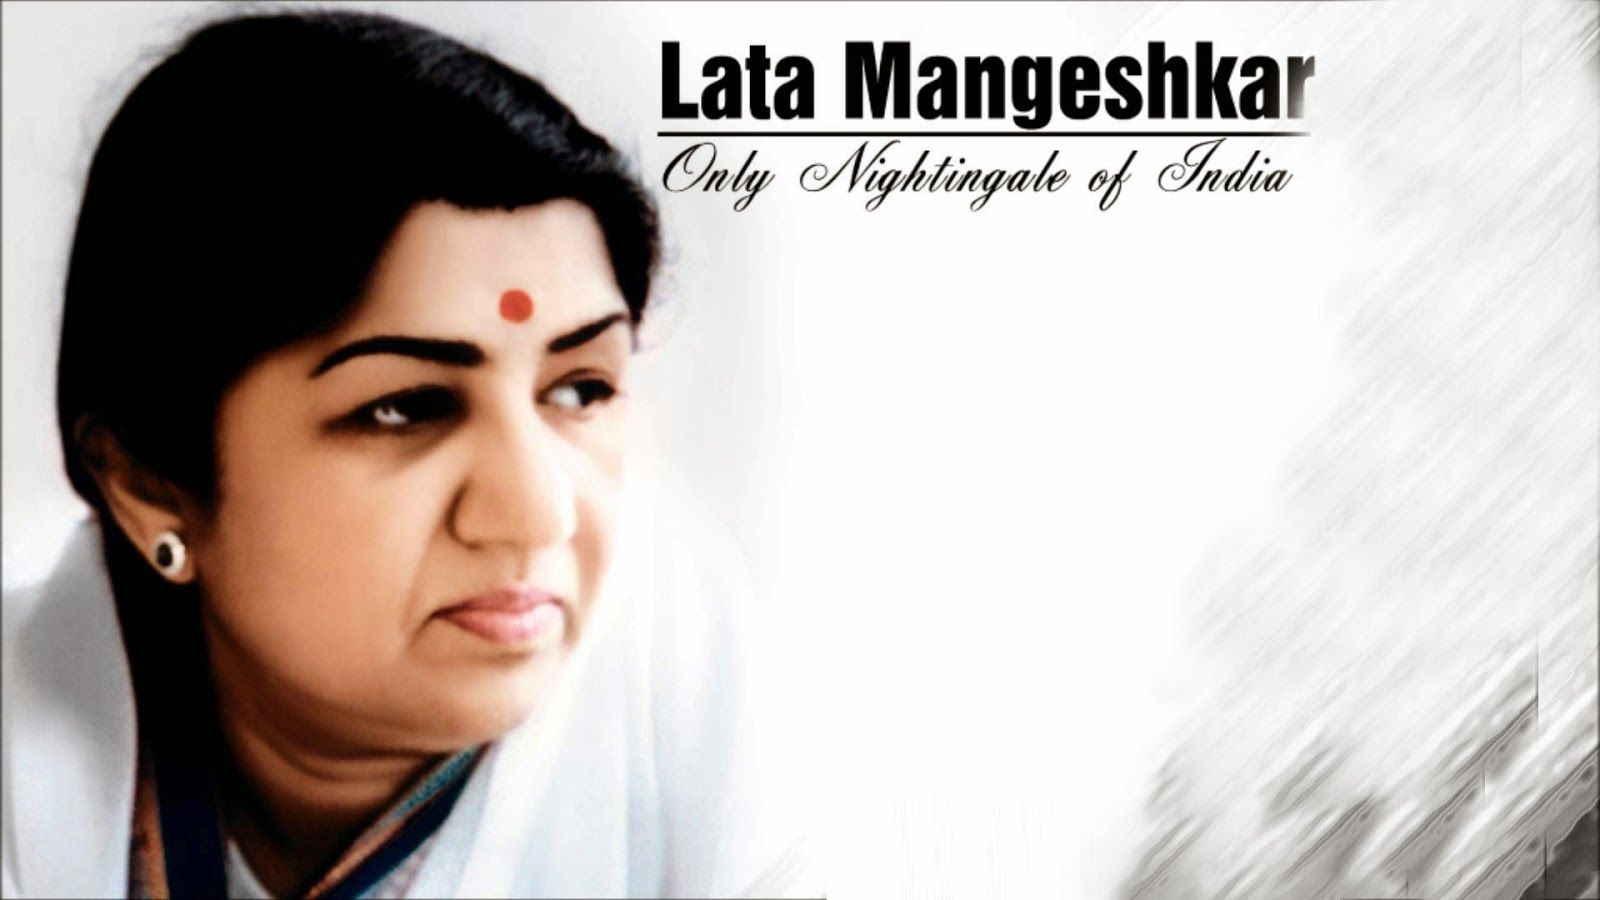 Indian Talented Person: Lata Mangeshkar